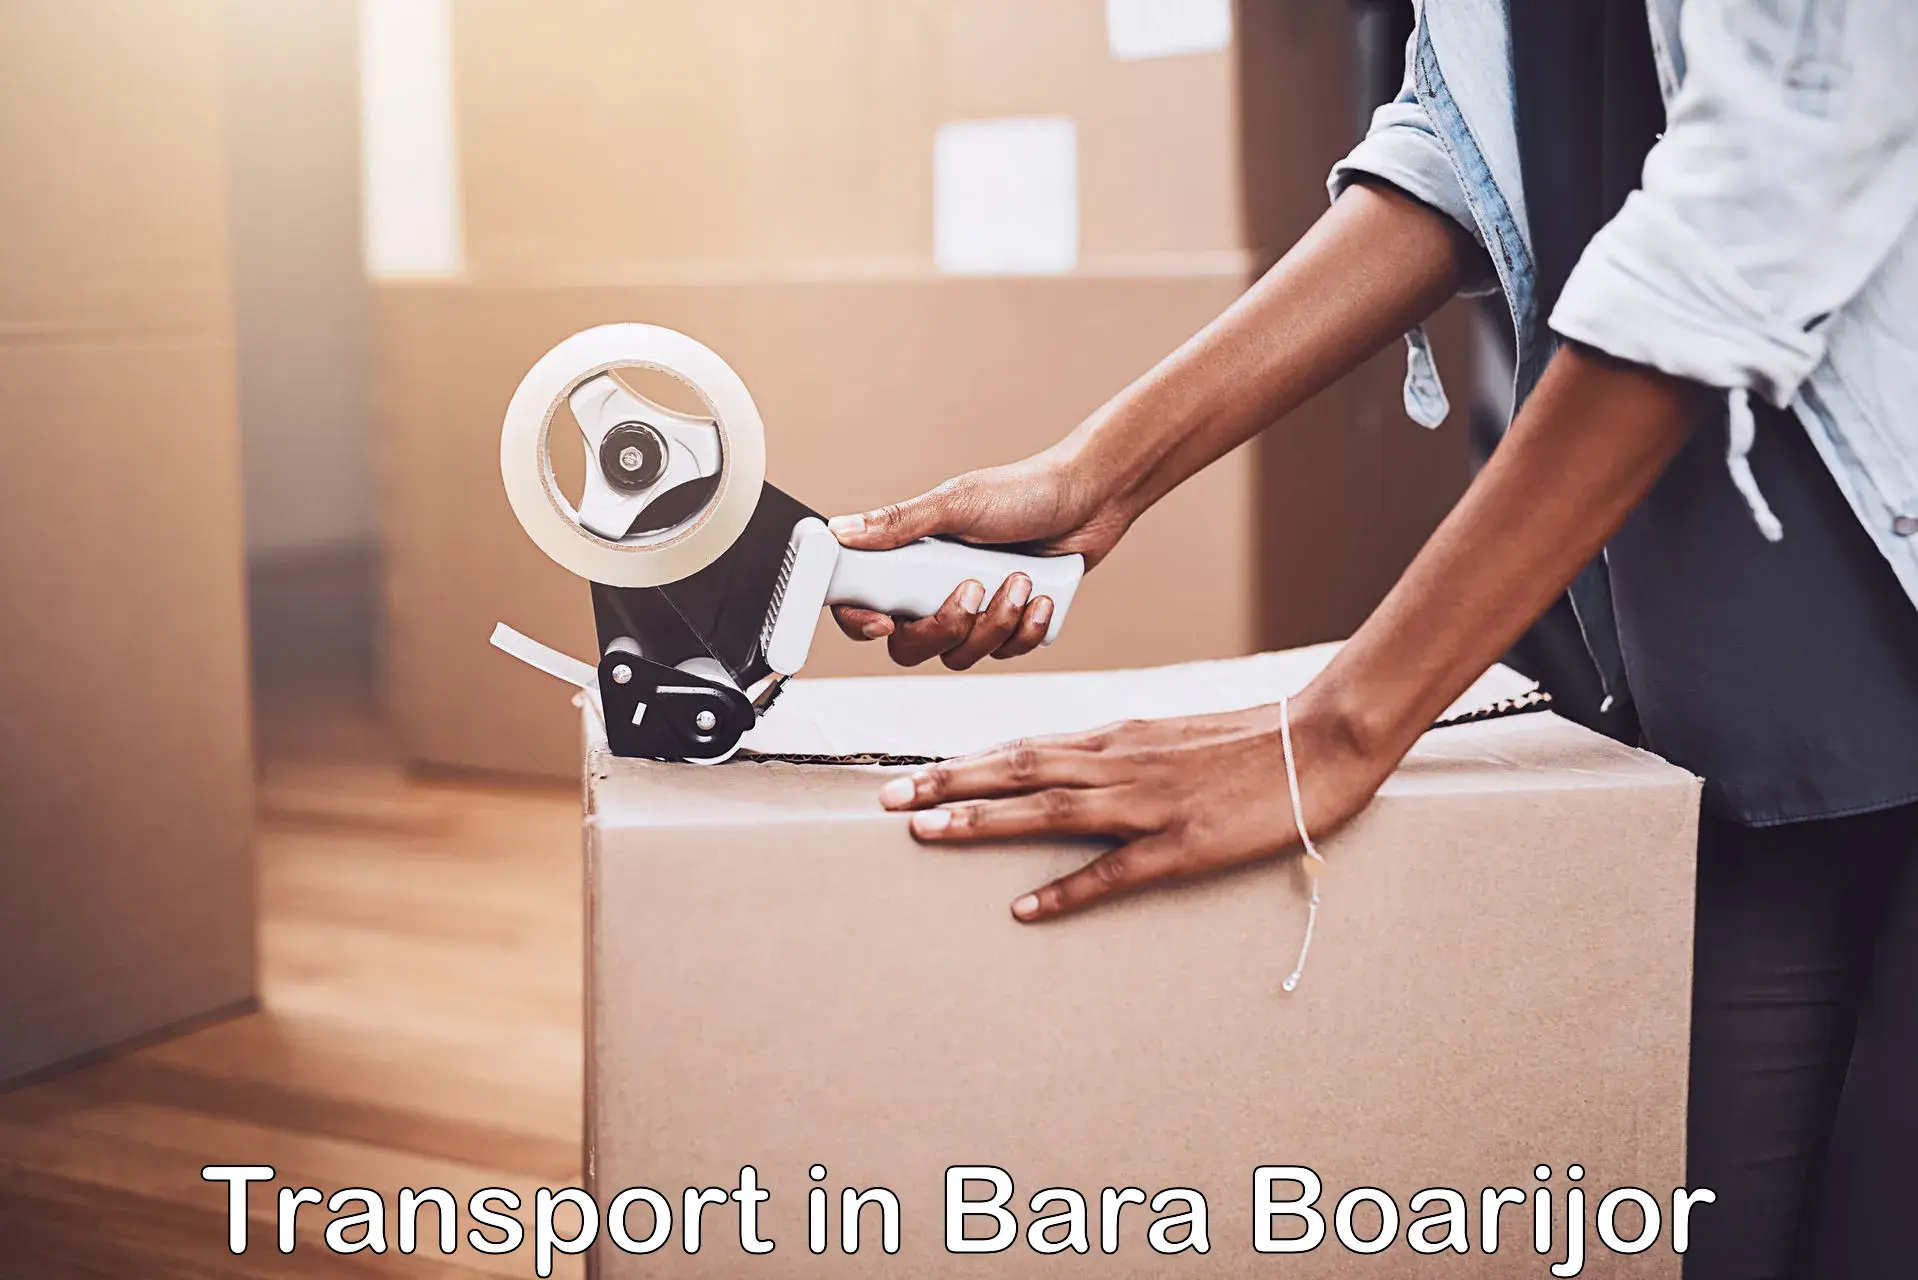 Cargo train transport services in Bara Boarijor